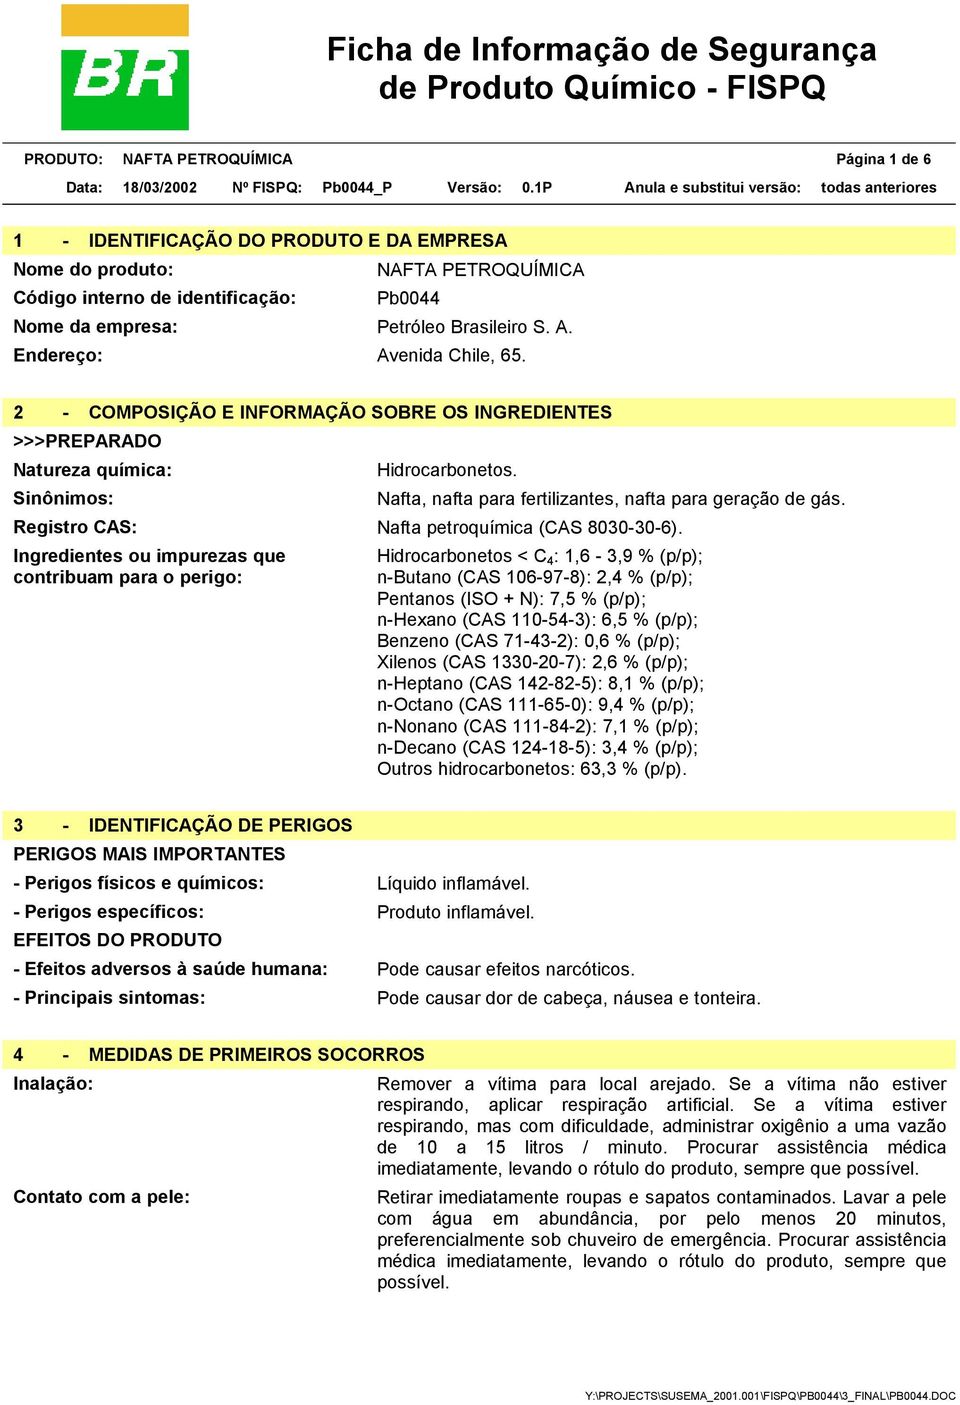 Registro CAS: Nafta petroquímica (CAS 8030-30-6).